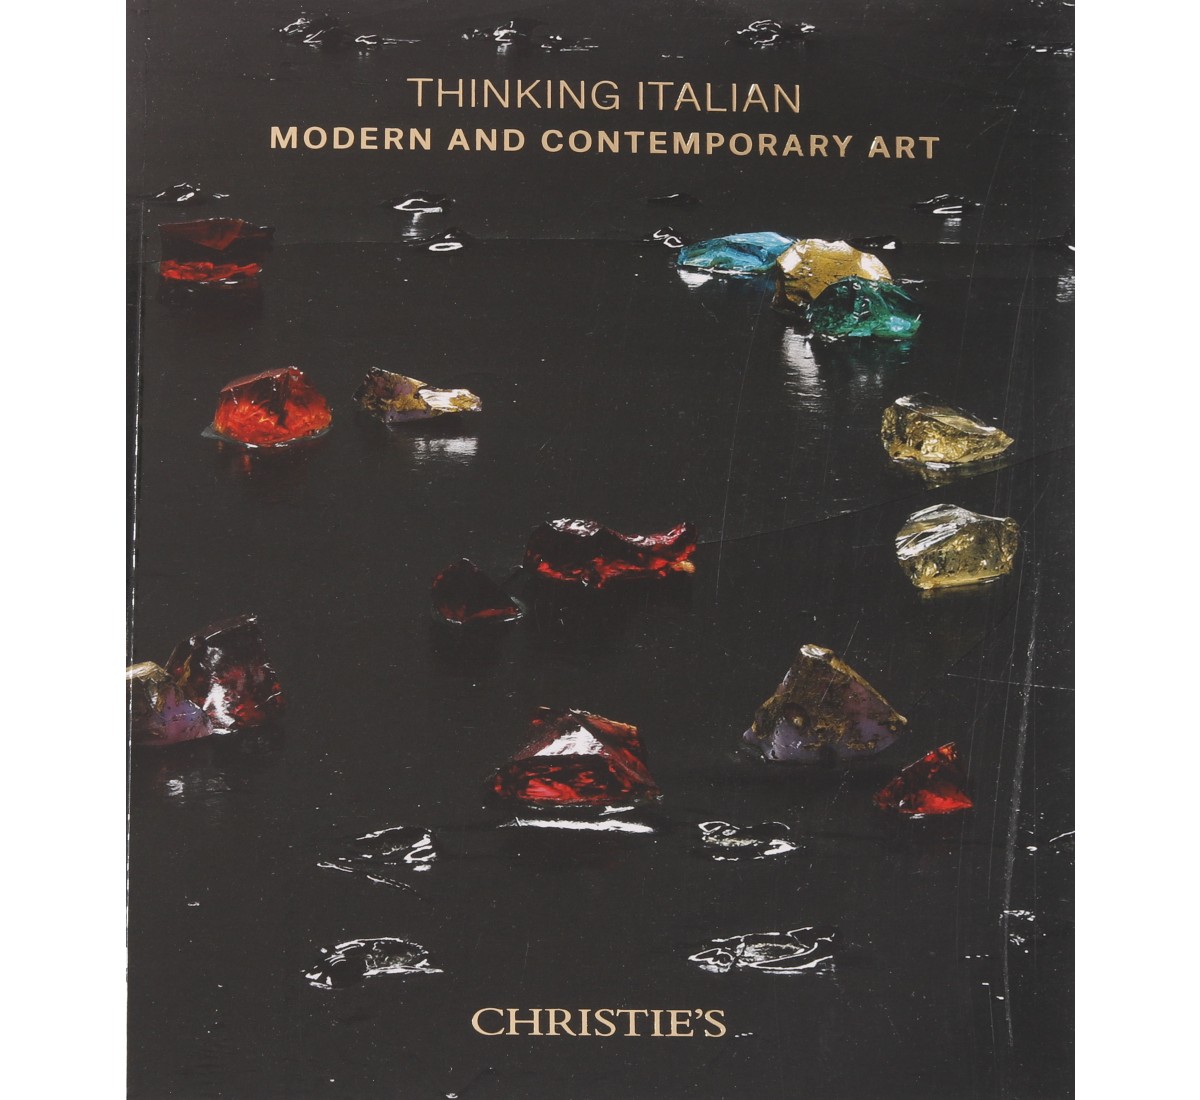 CHRISTIE'S, THINKING ITALIAN MODERN AND CONTEMPORARY ART